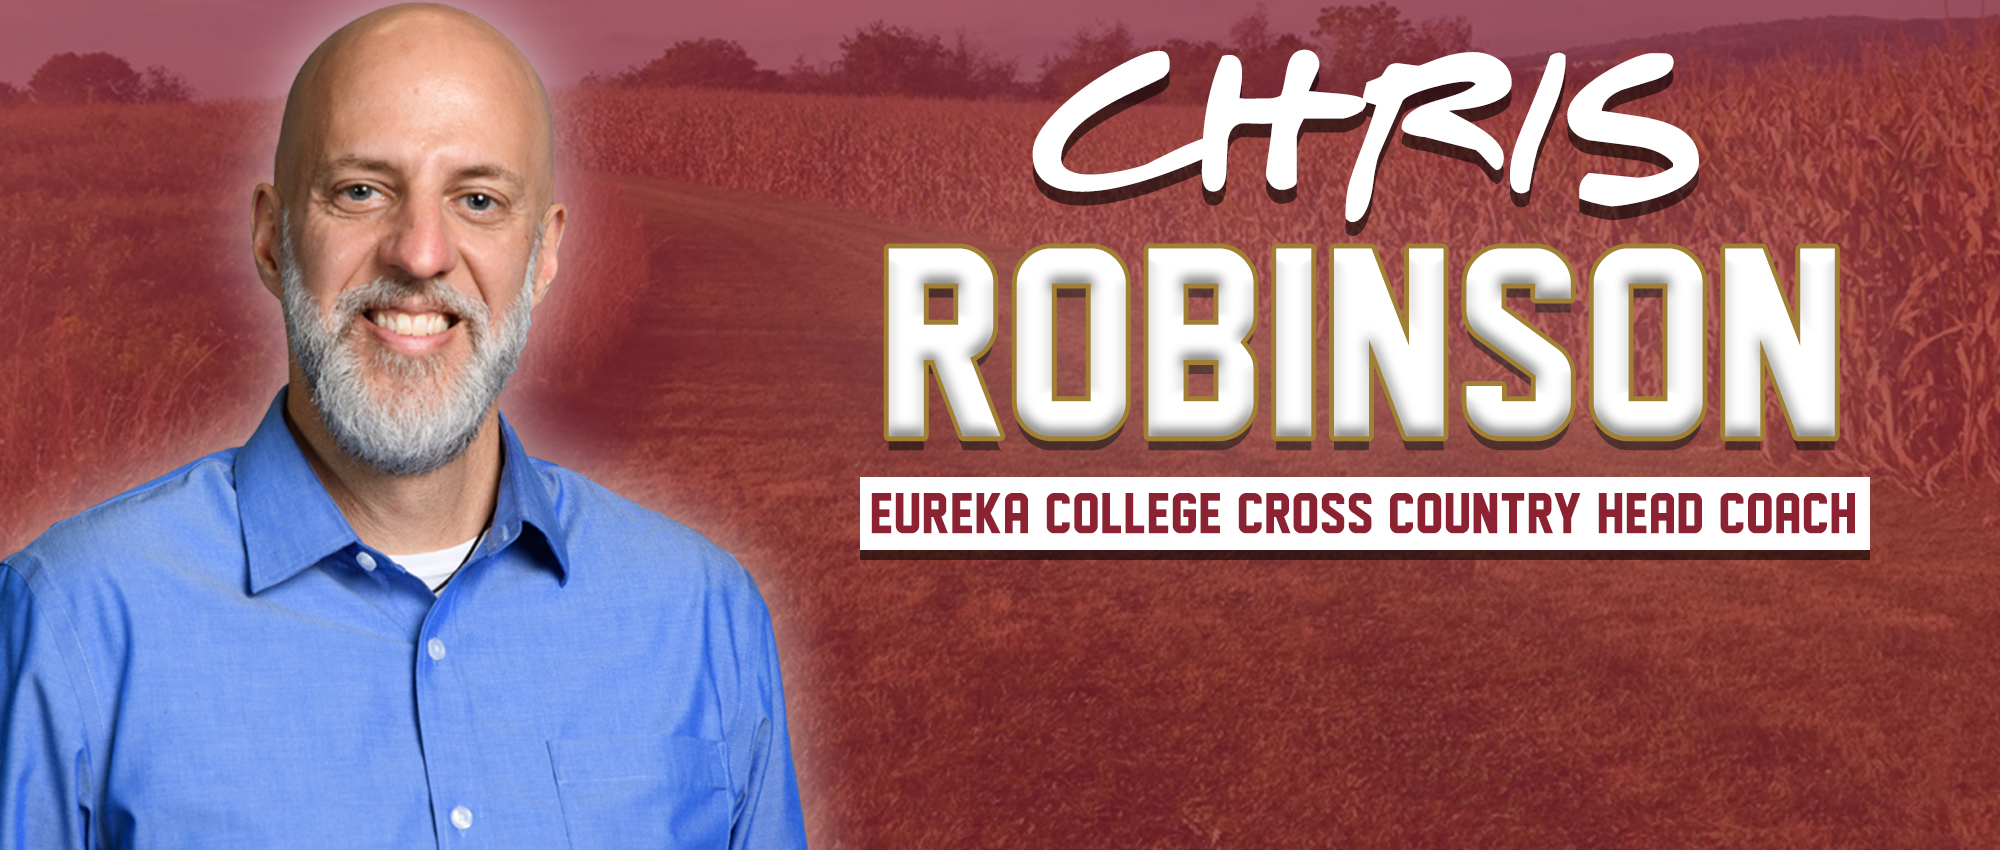 Cross Country Returning to Eureka College Athletics